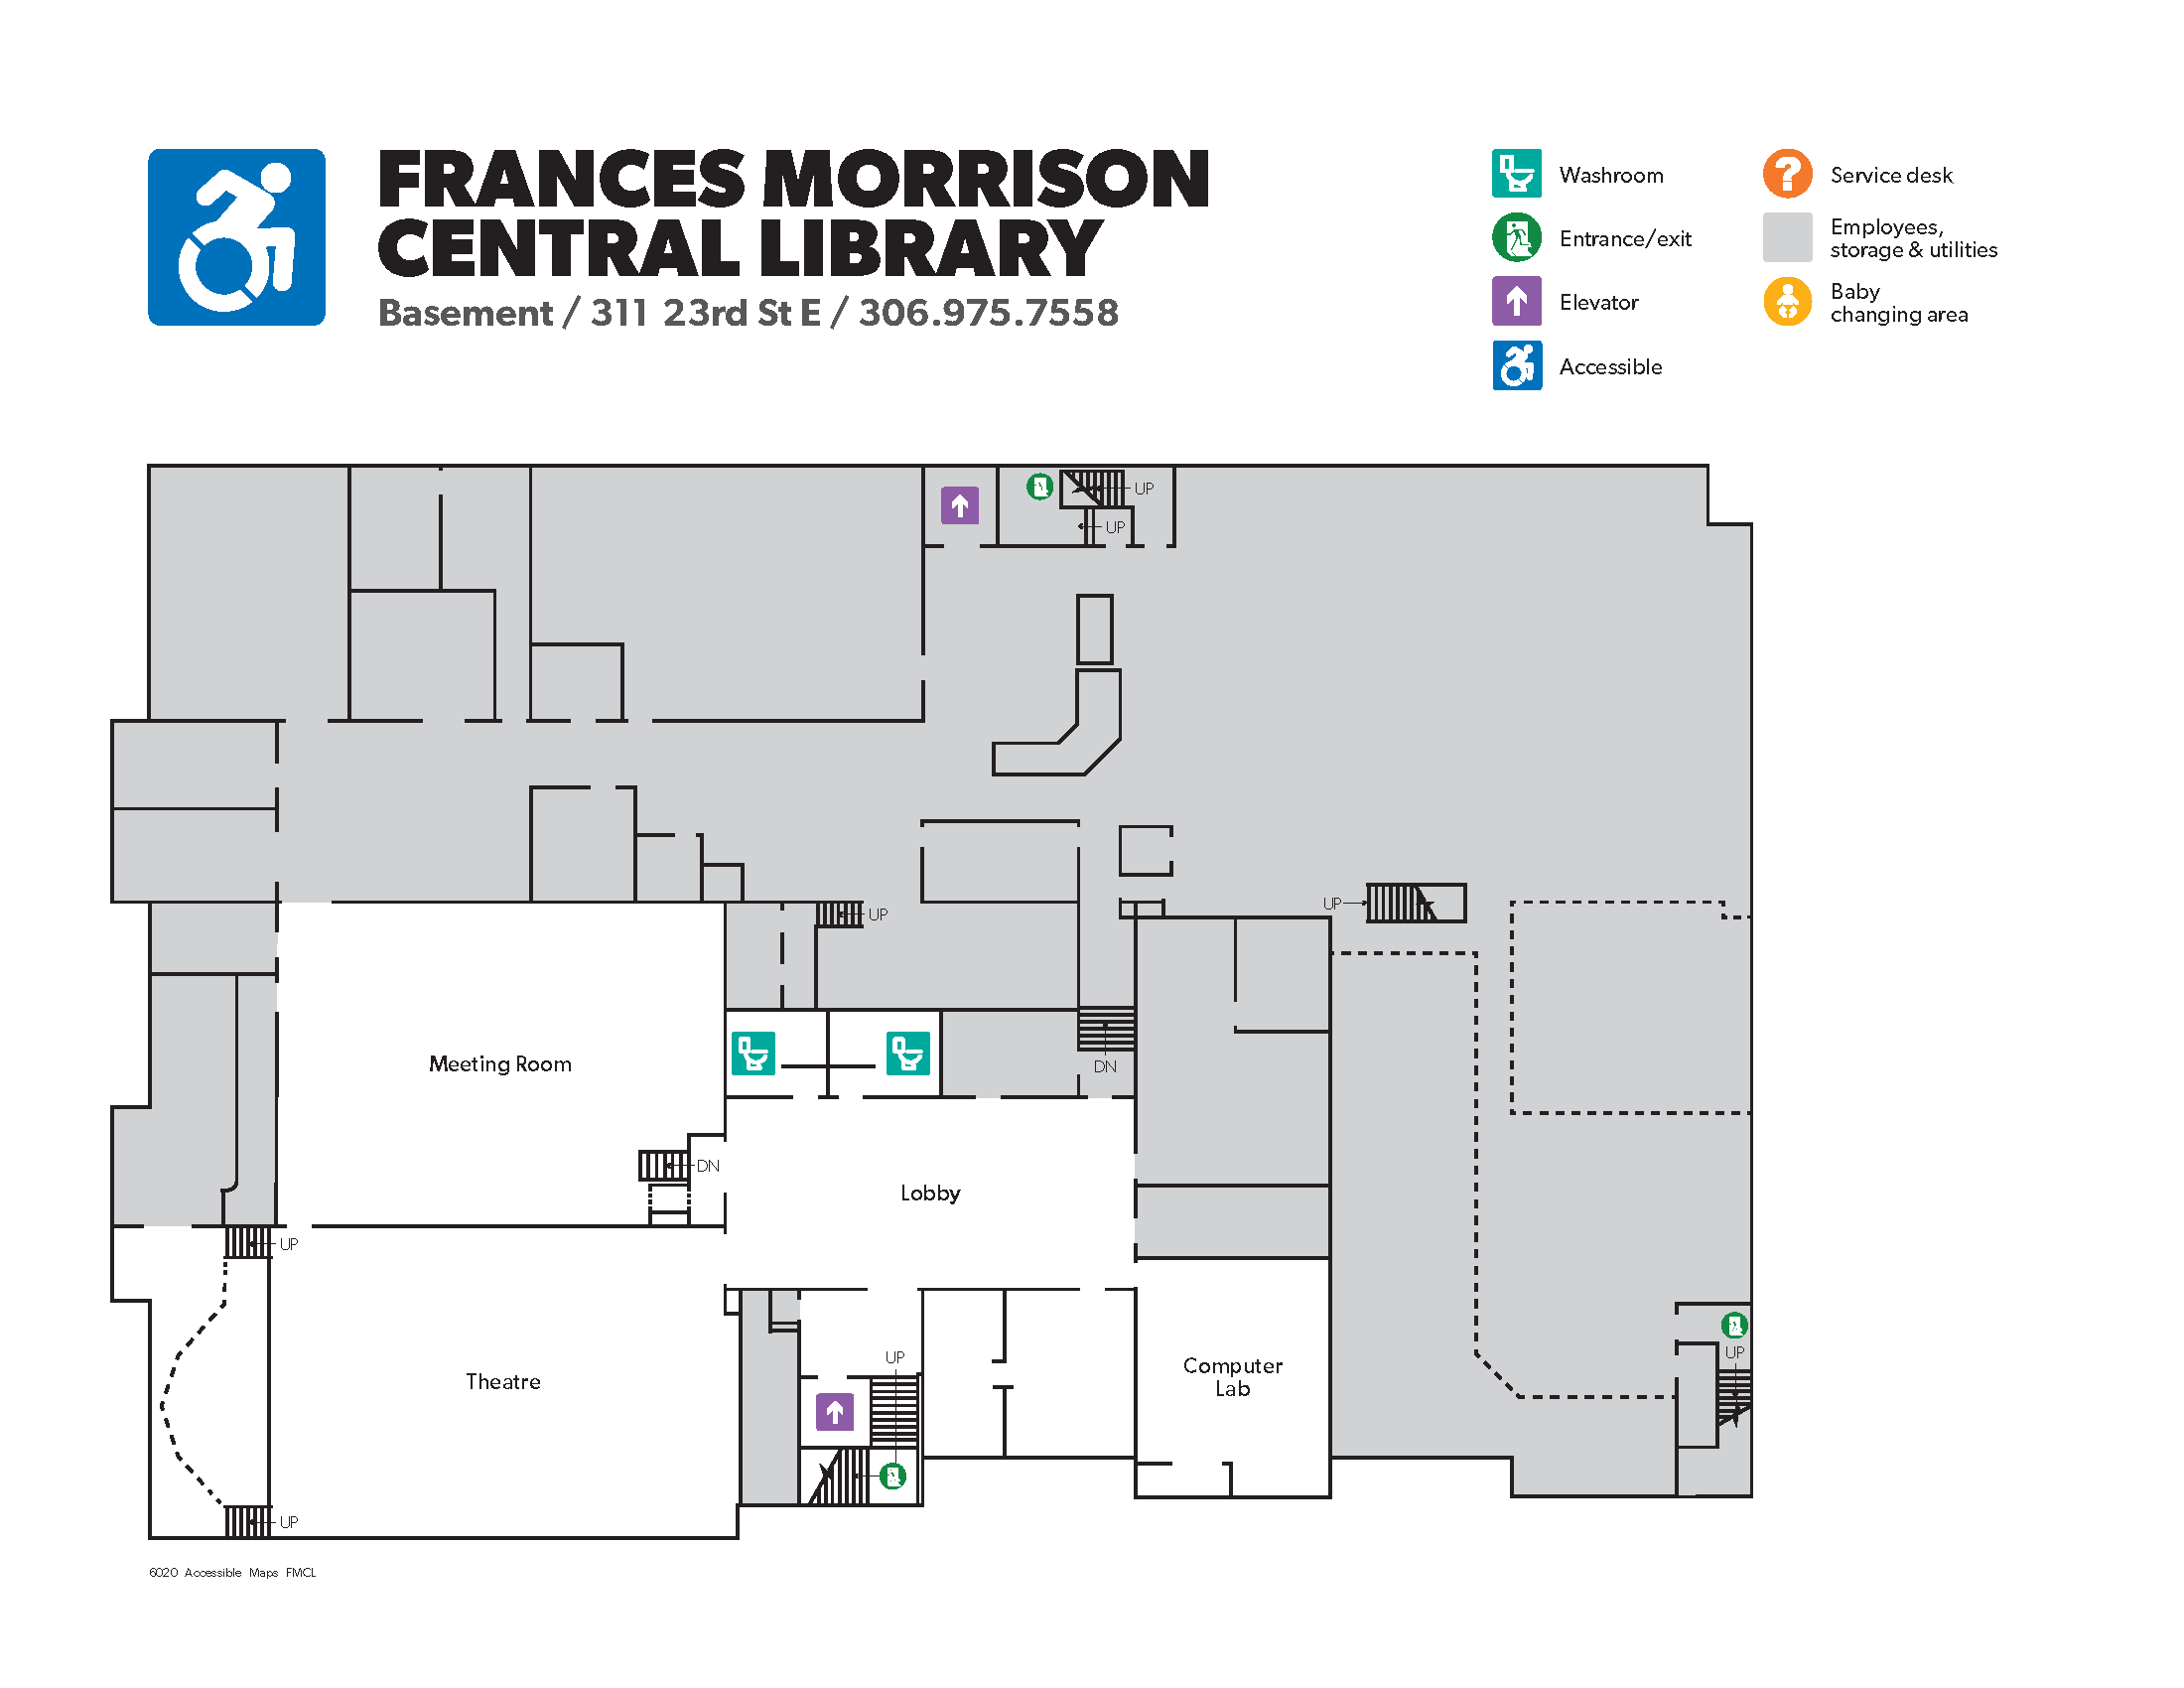 Frances Morrison basement floor plan